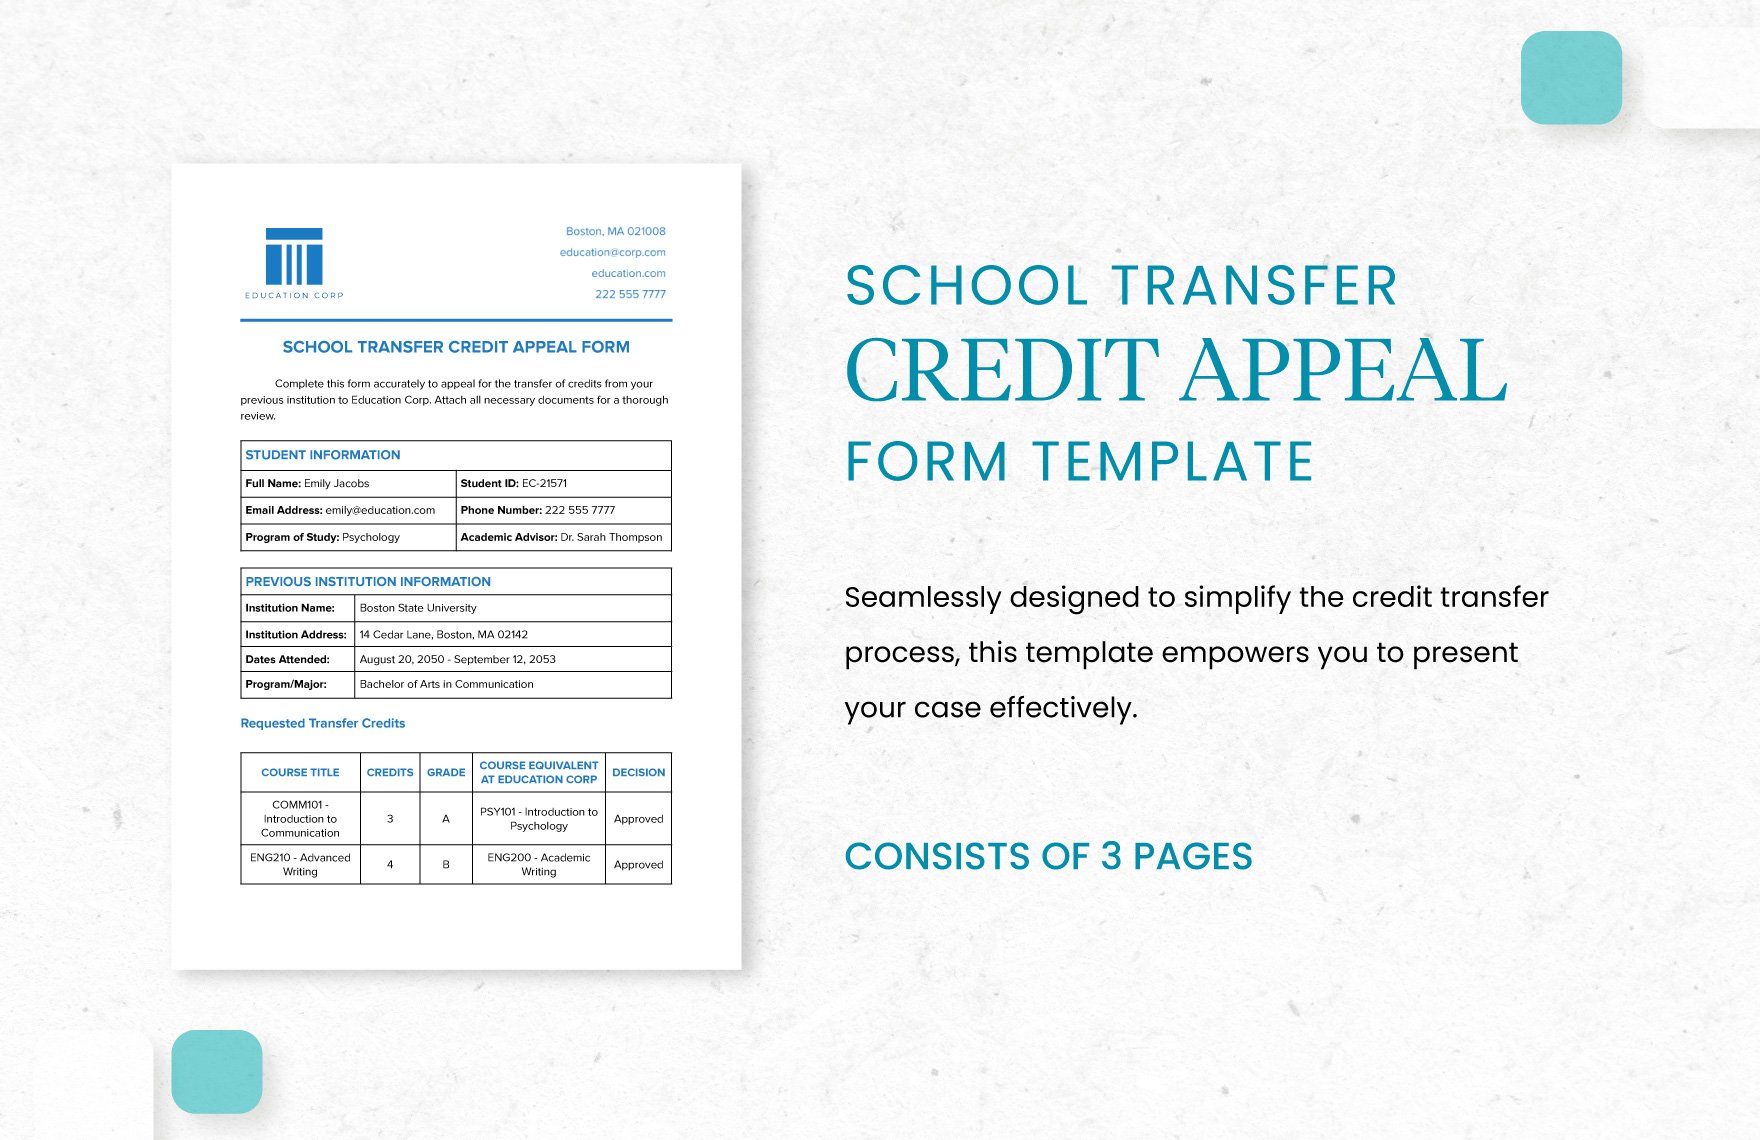 School Transfer Credit Appeal Form Template in Word, Google Docs, PDF